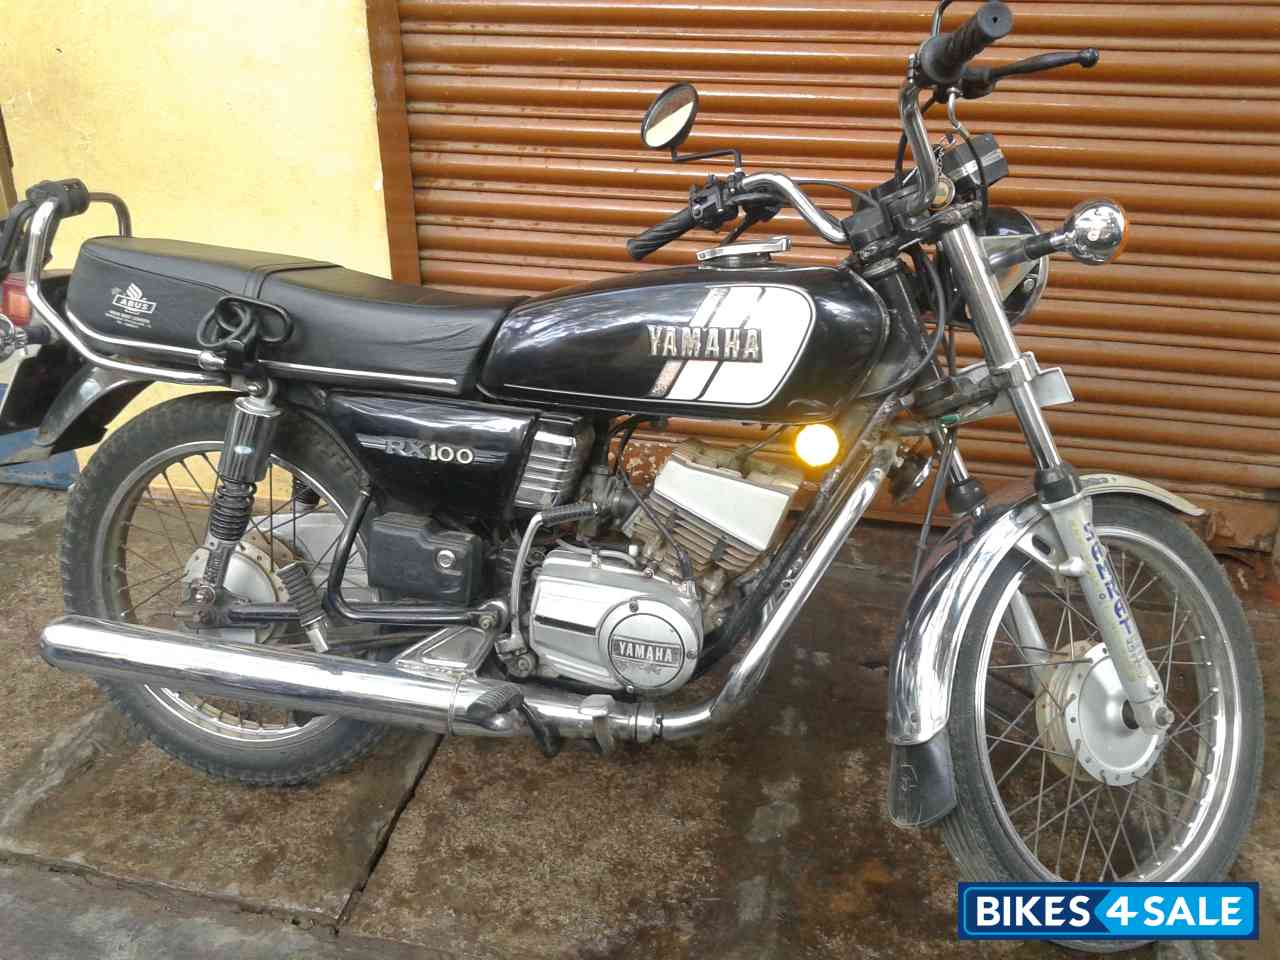 Yamaha Rx 100 New Bike Price In Bangalore لم يسبق له مثيل الصور